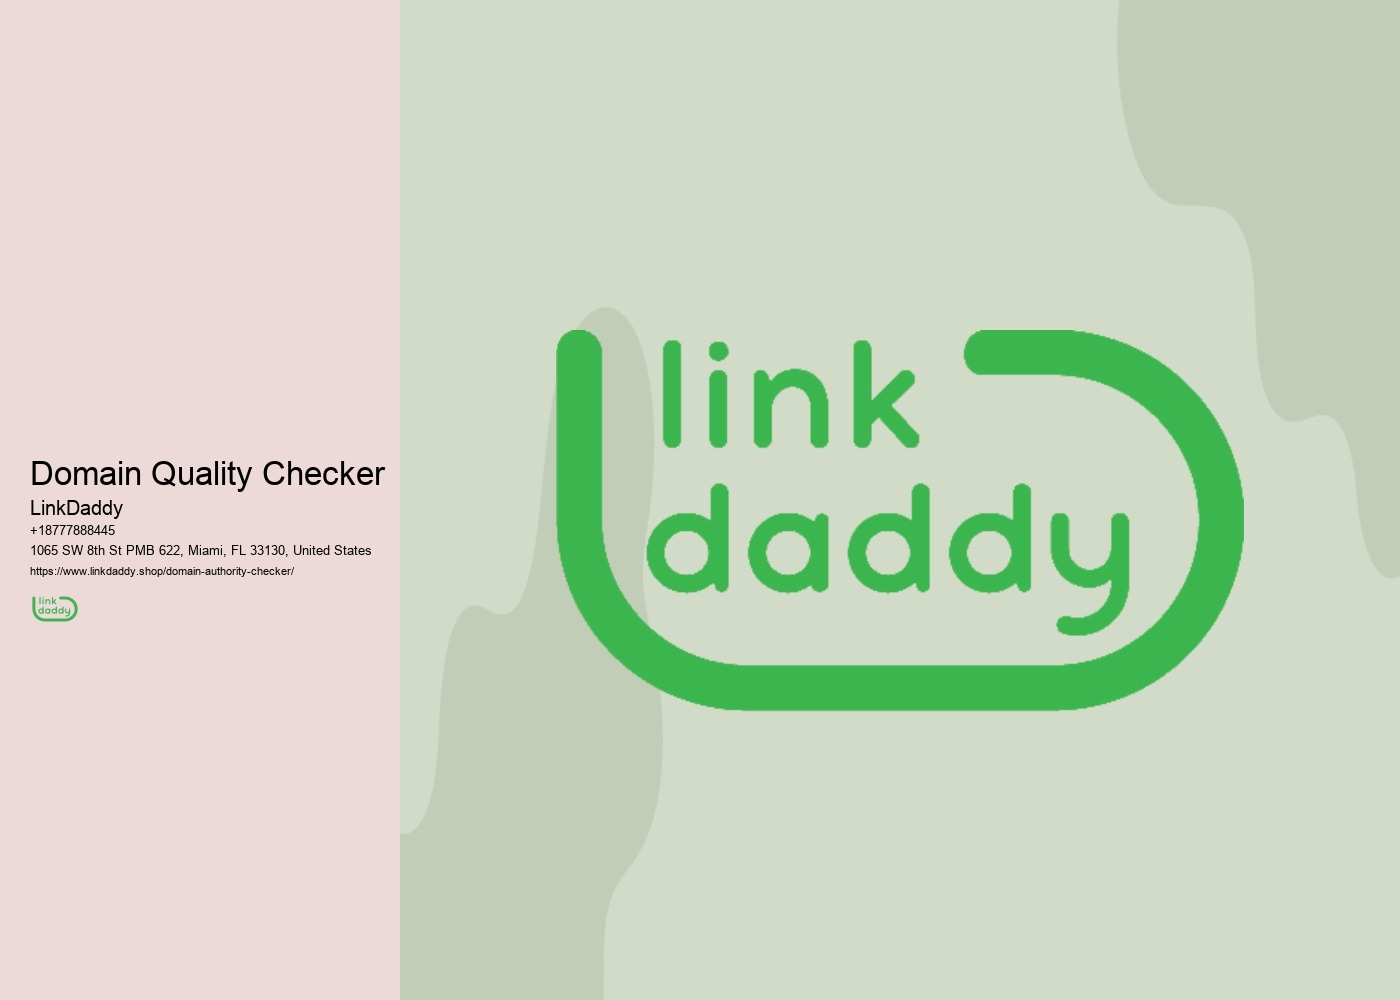 Domain Quality Checker